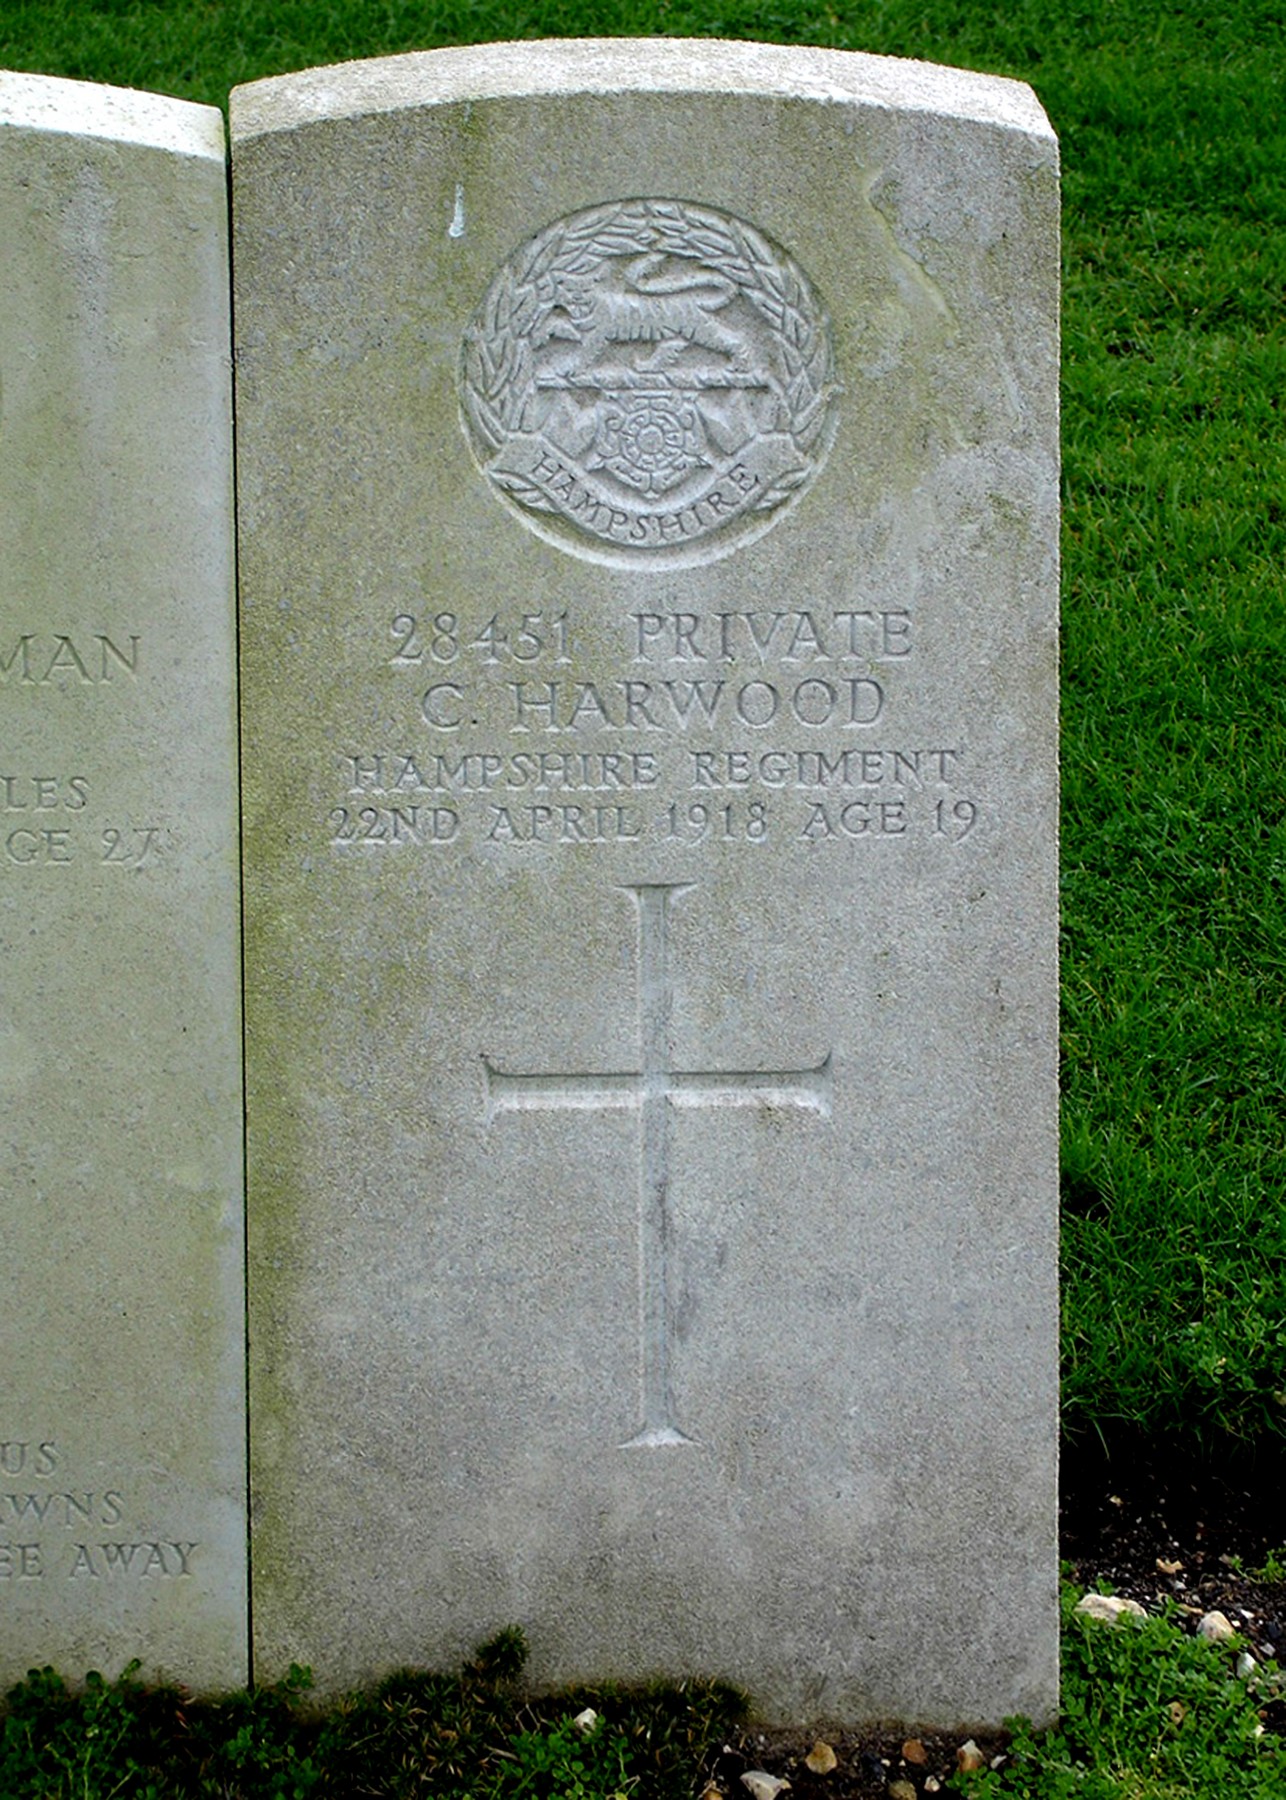 Grave of Charles Harwood